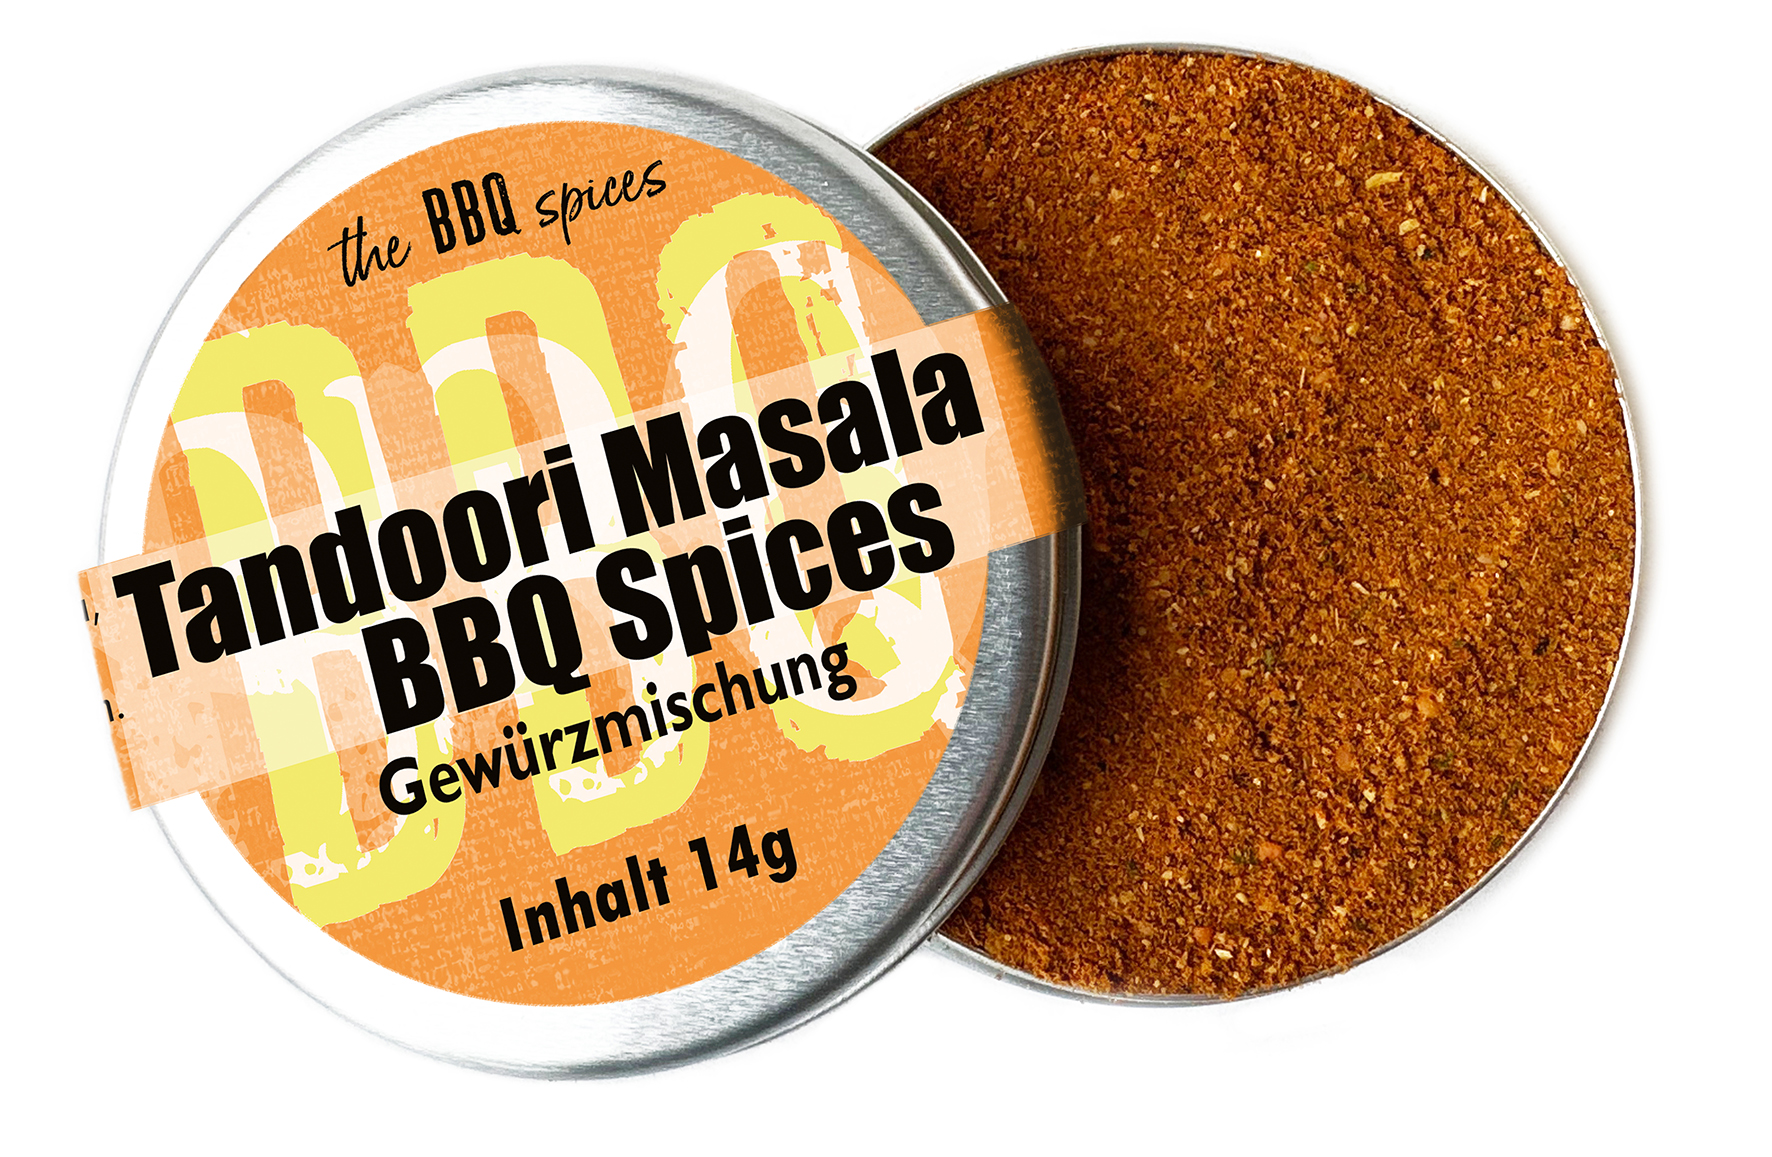 Tandoori Masala BBQ Spices